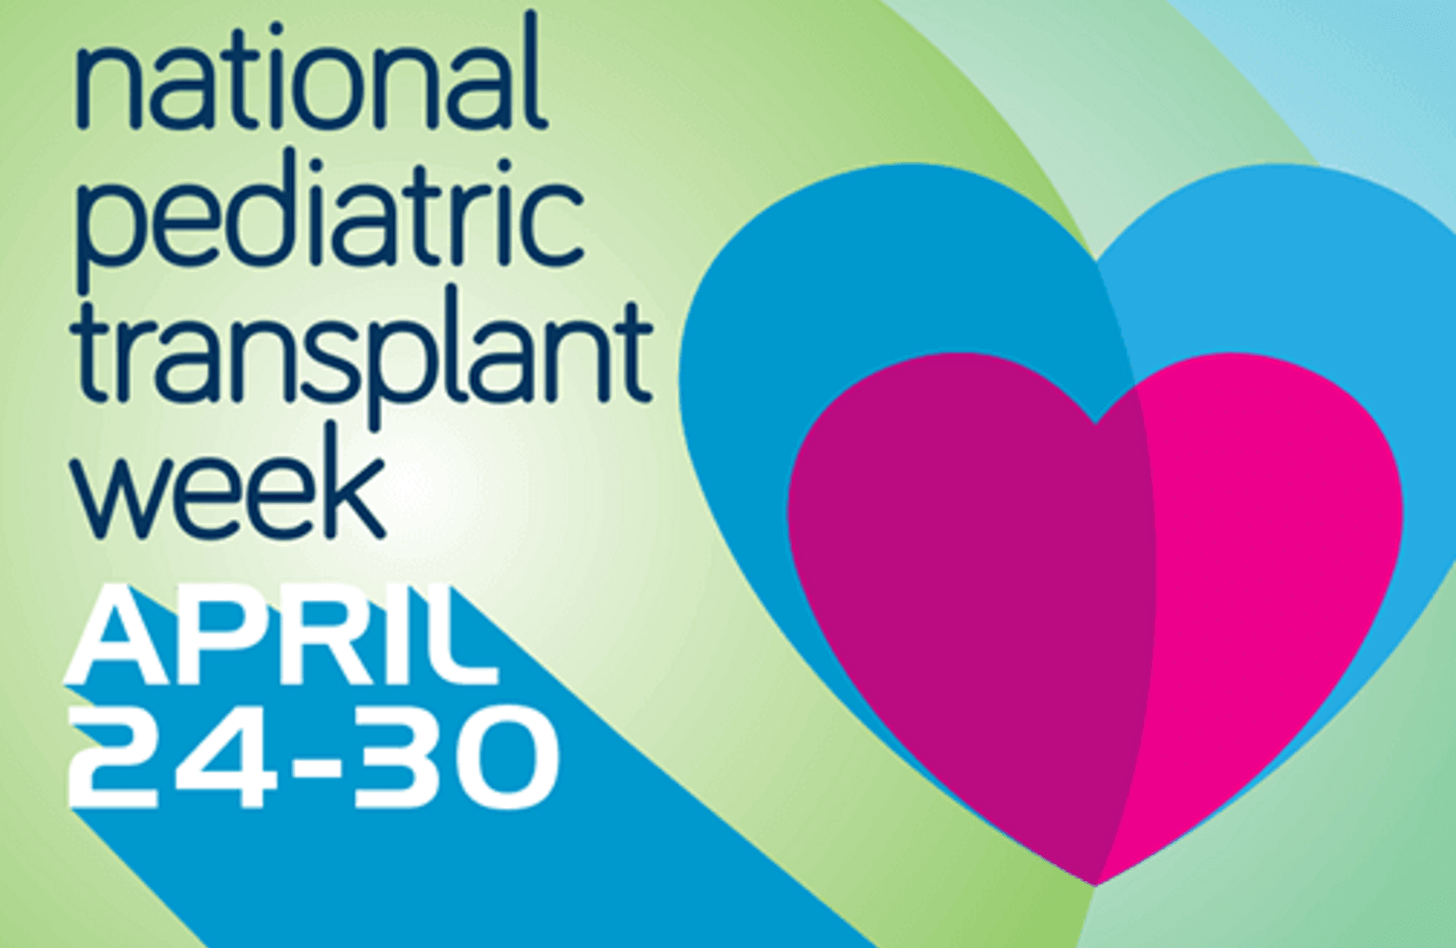 National Pediatric Transplant Week: April 24-30, 2022